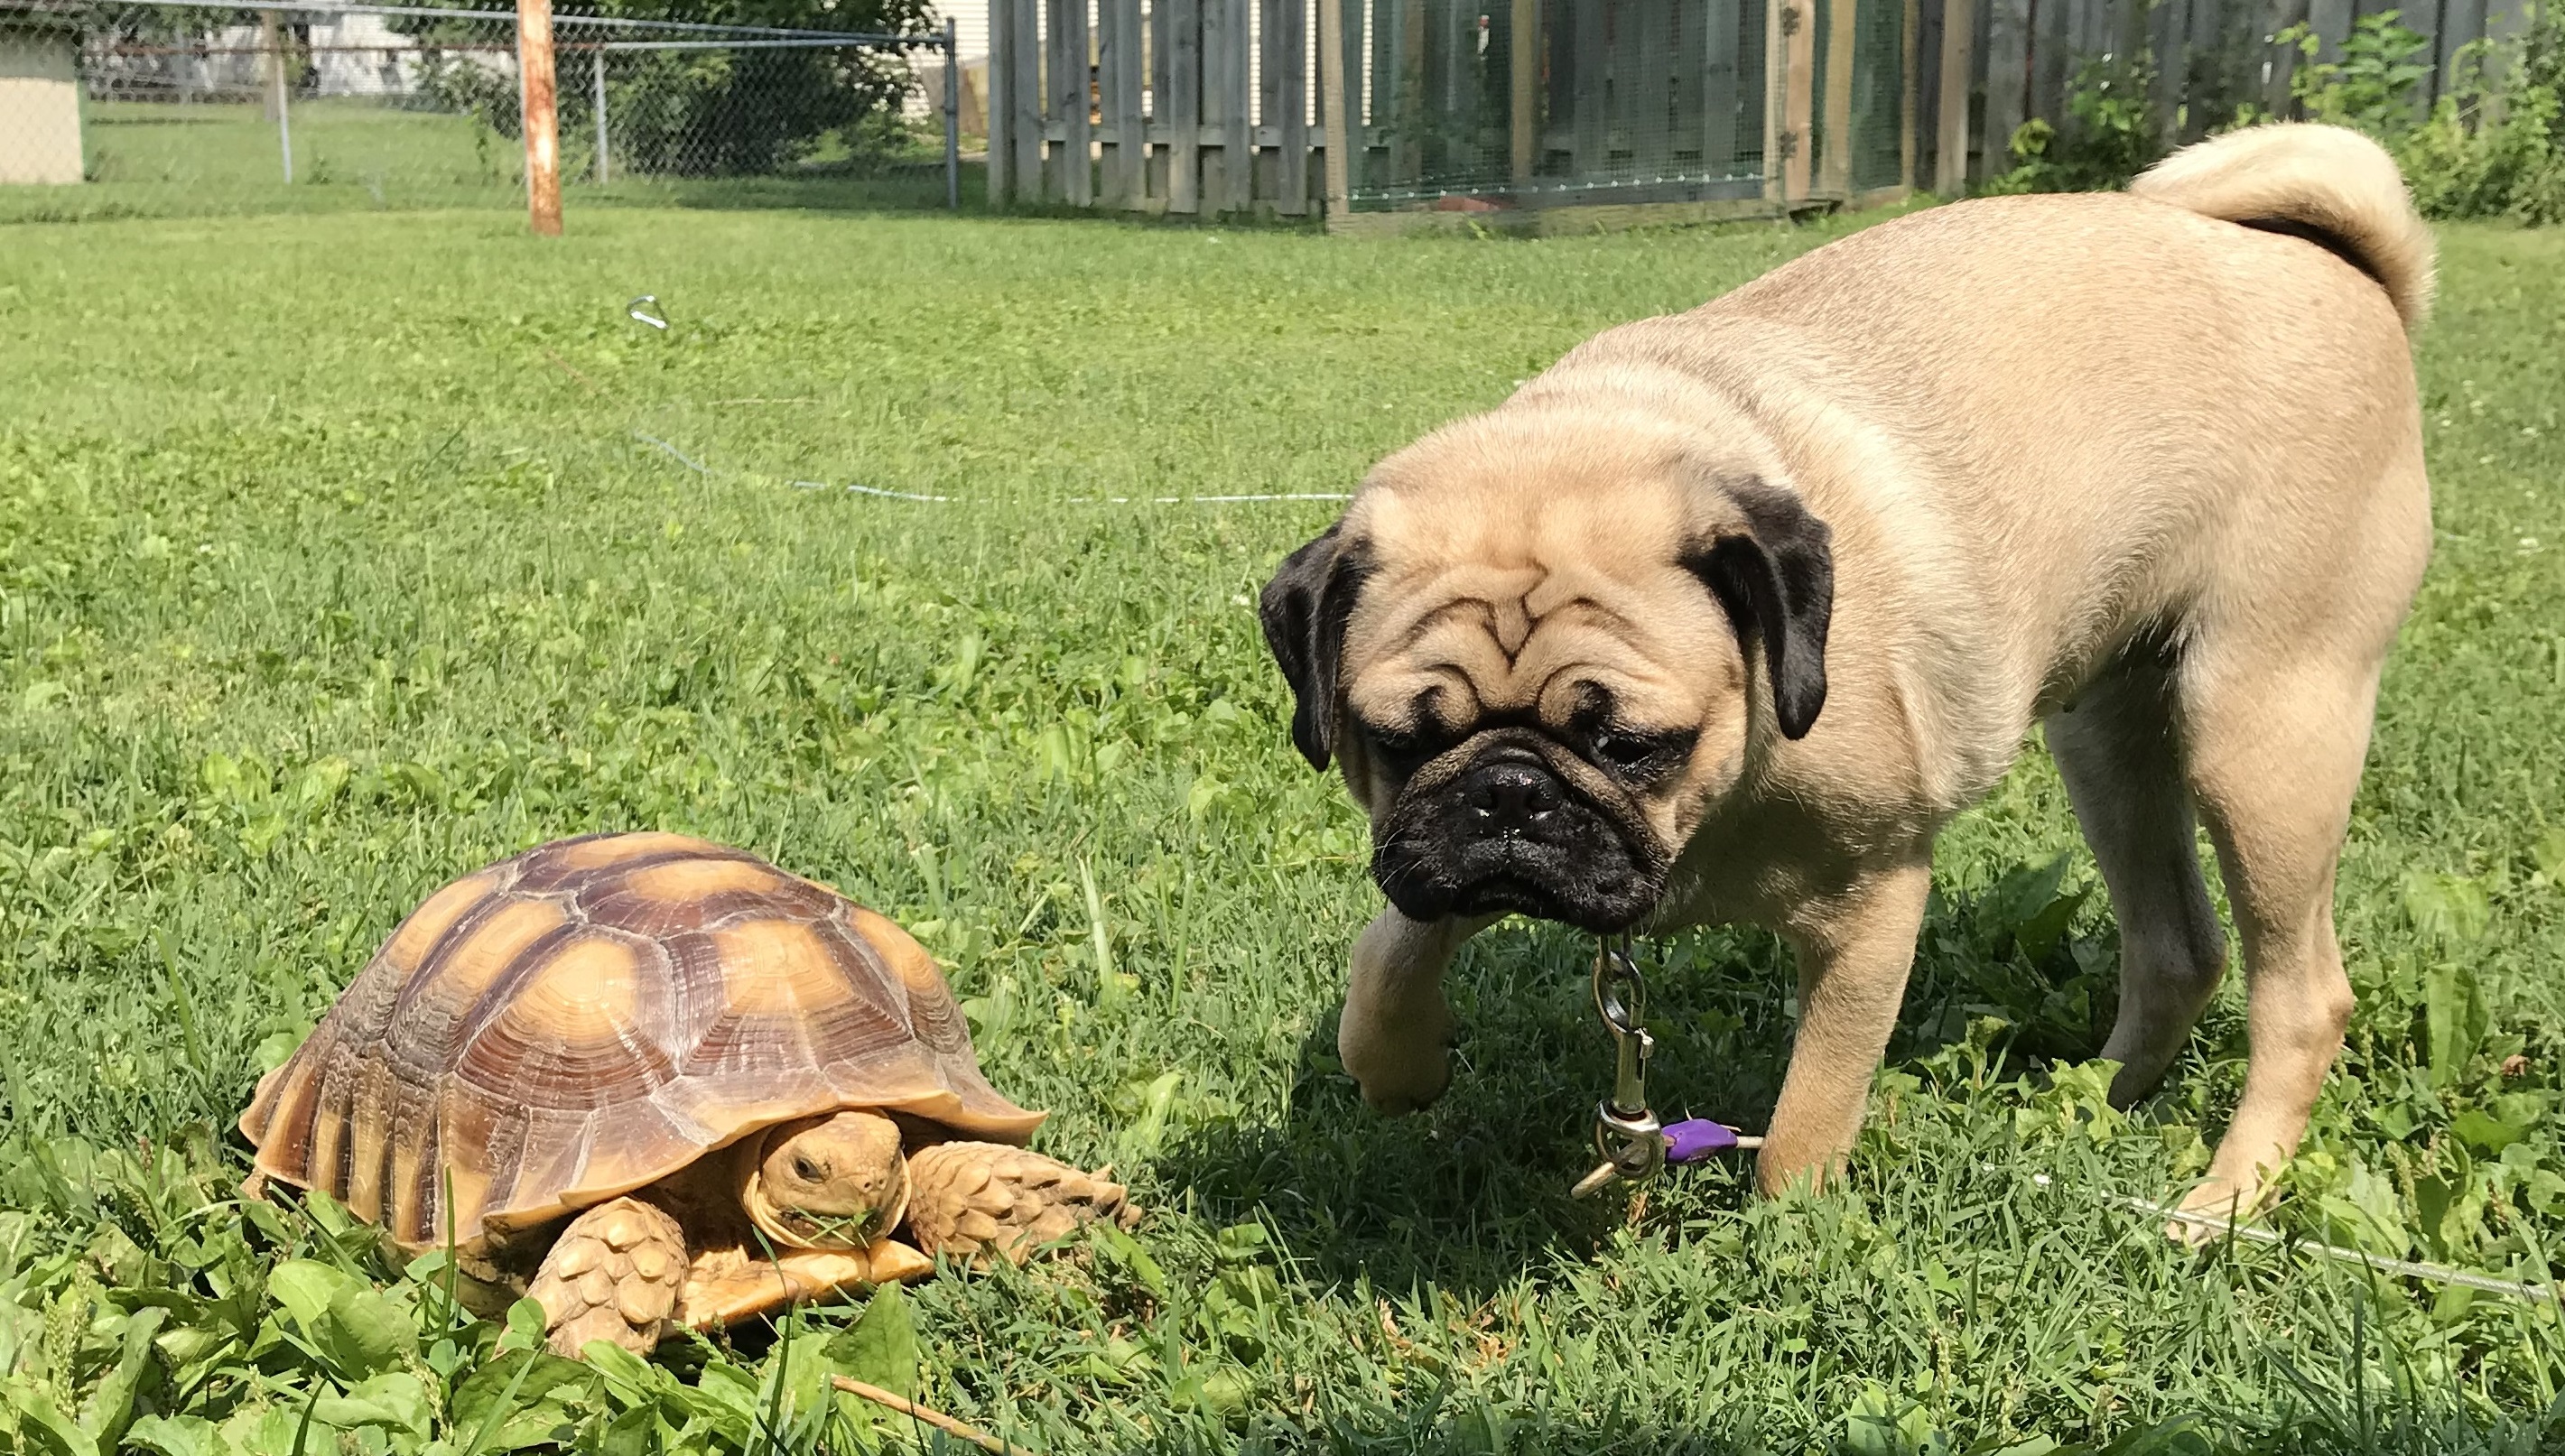 Tortoise and dog